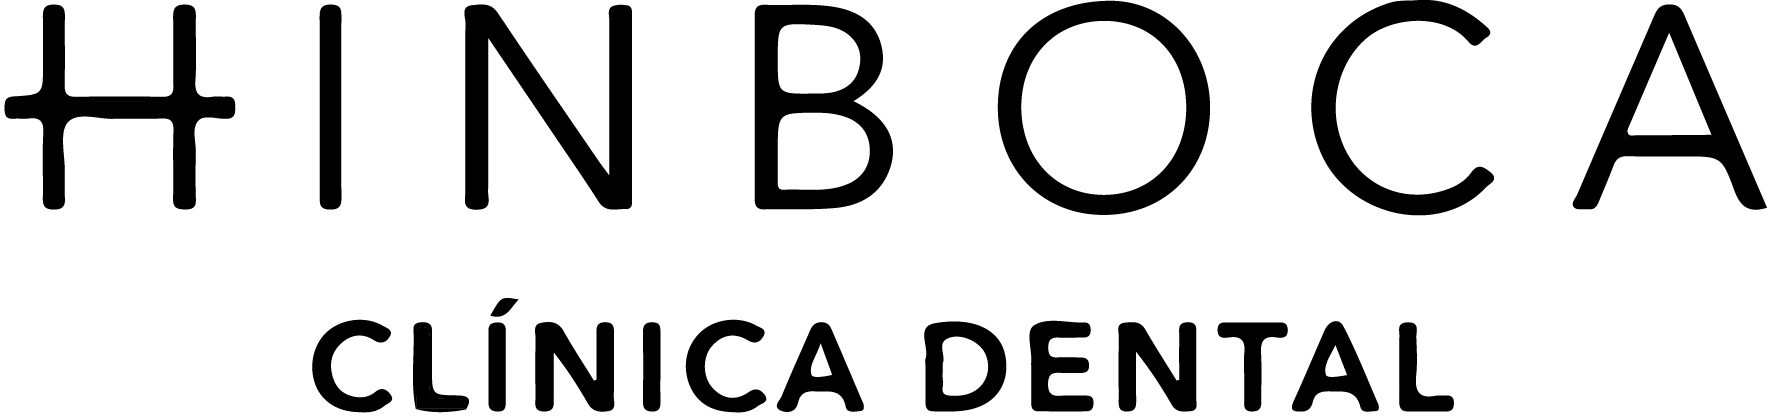 Logo Hinboca - Cliente Auditecnic